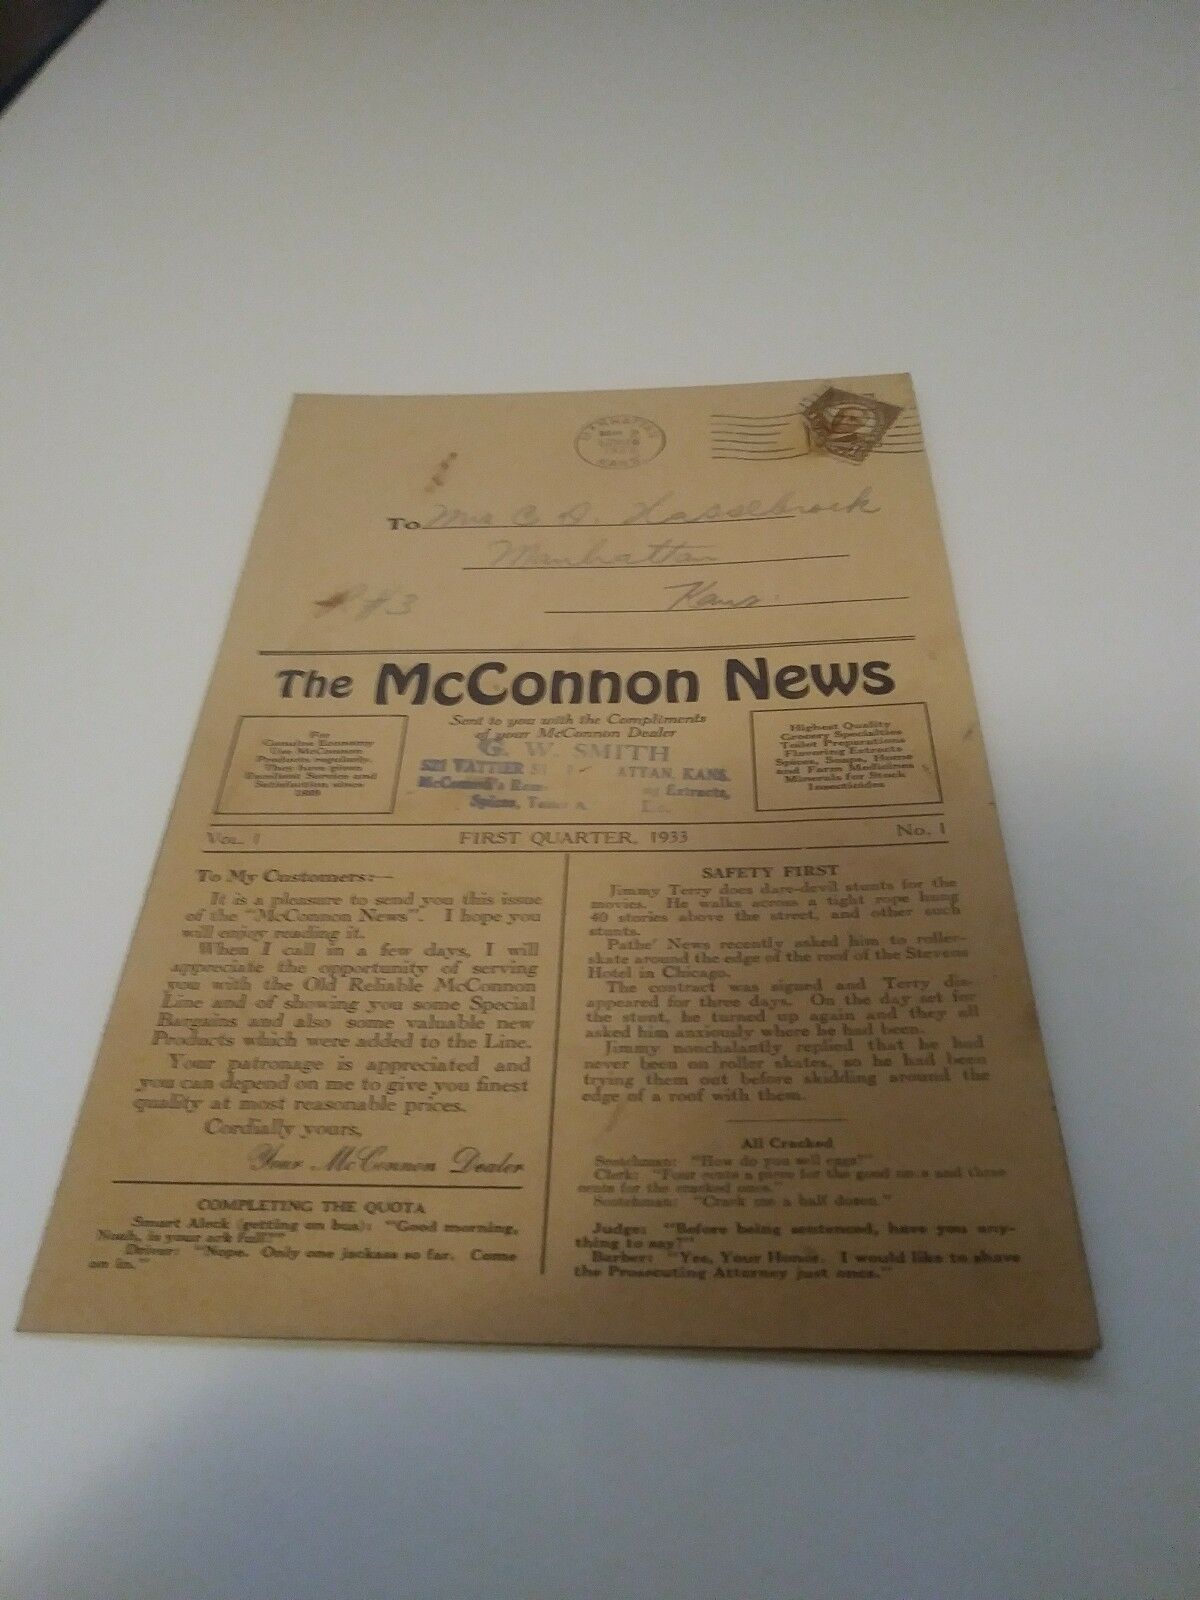 The Mcconnon News Vol 1 No. 1 1933 First Quarter